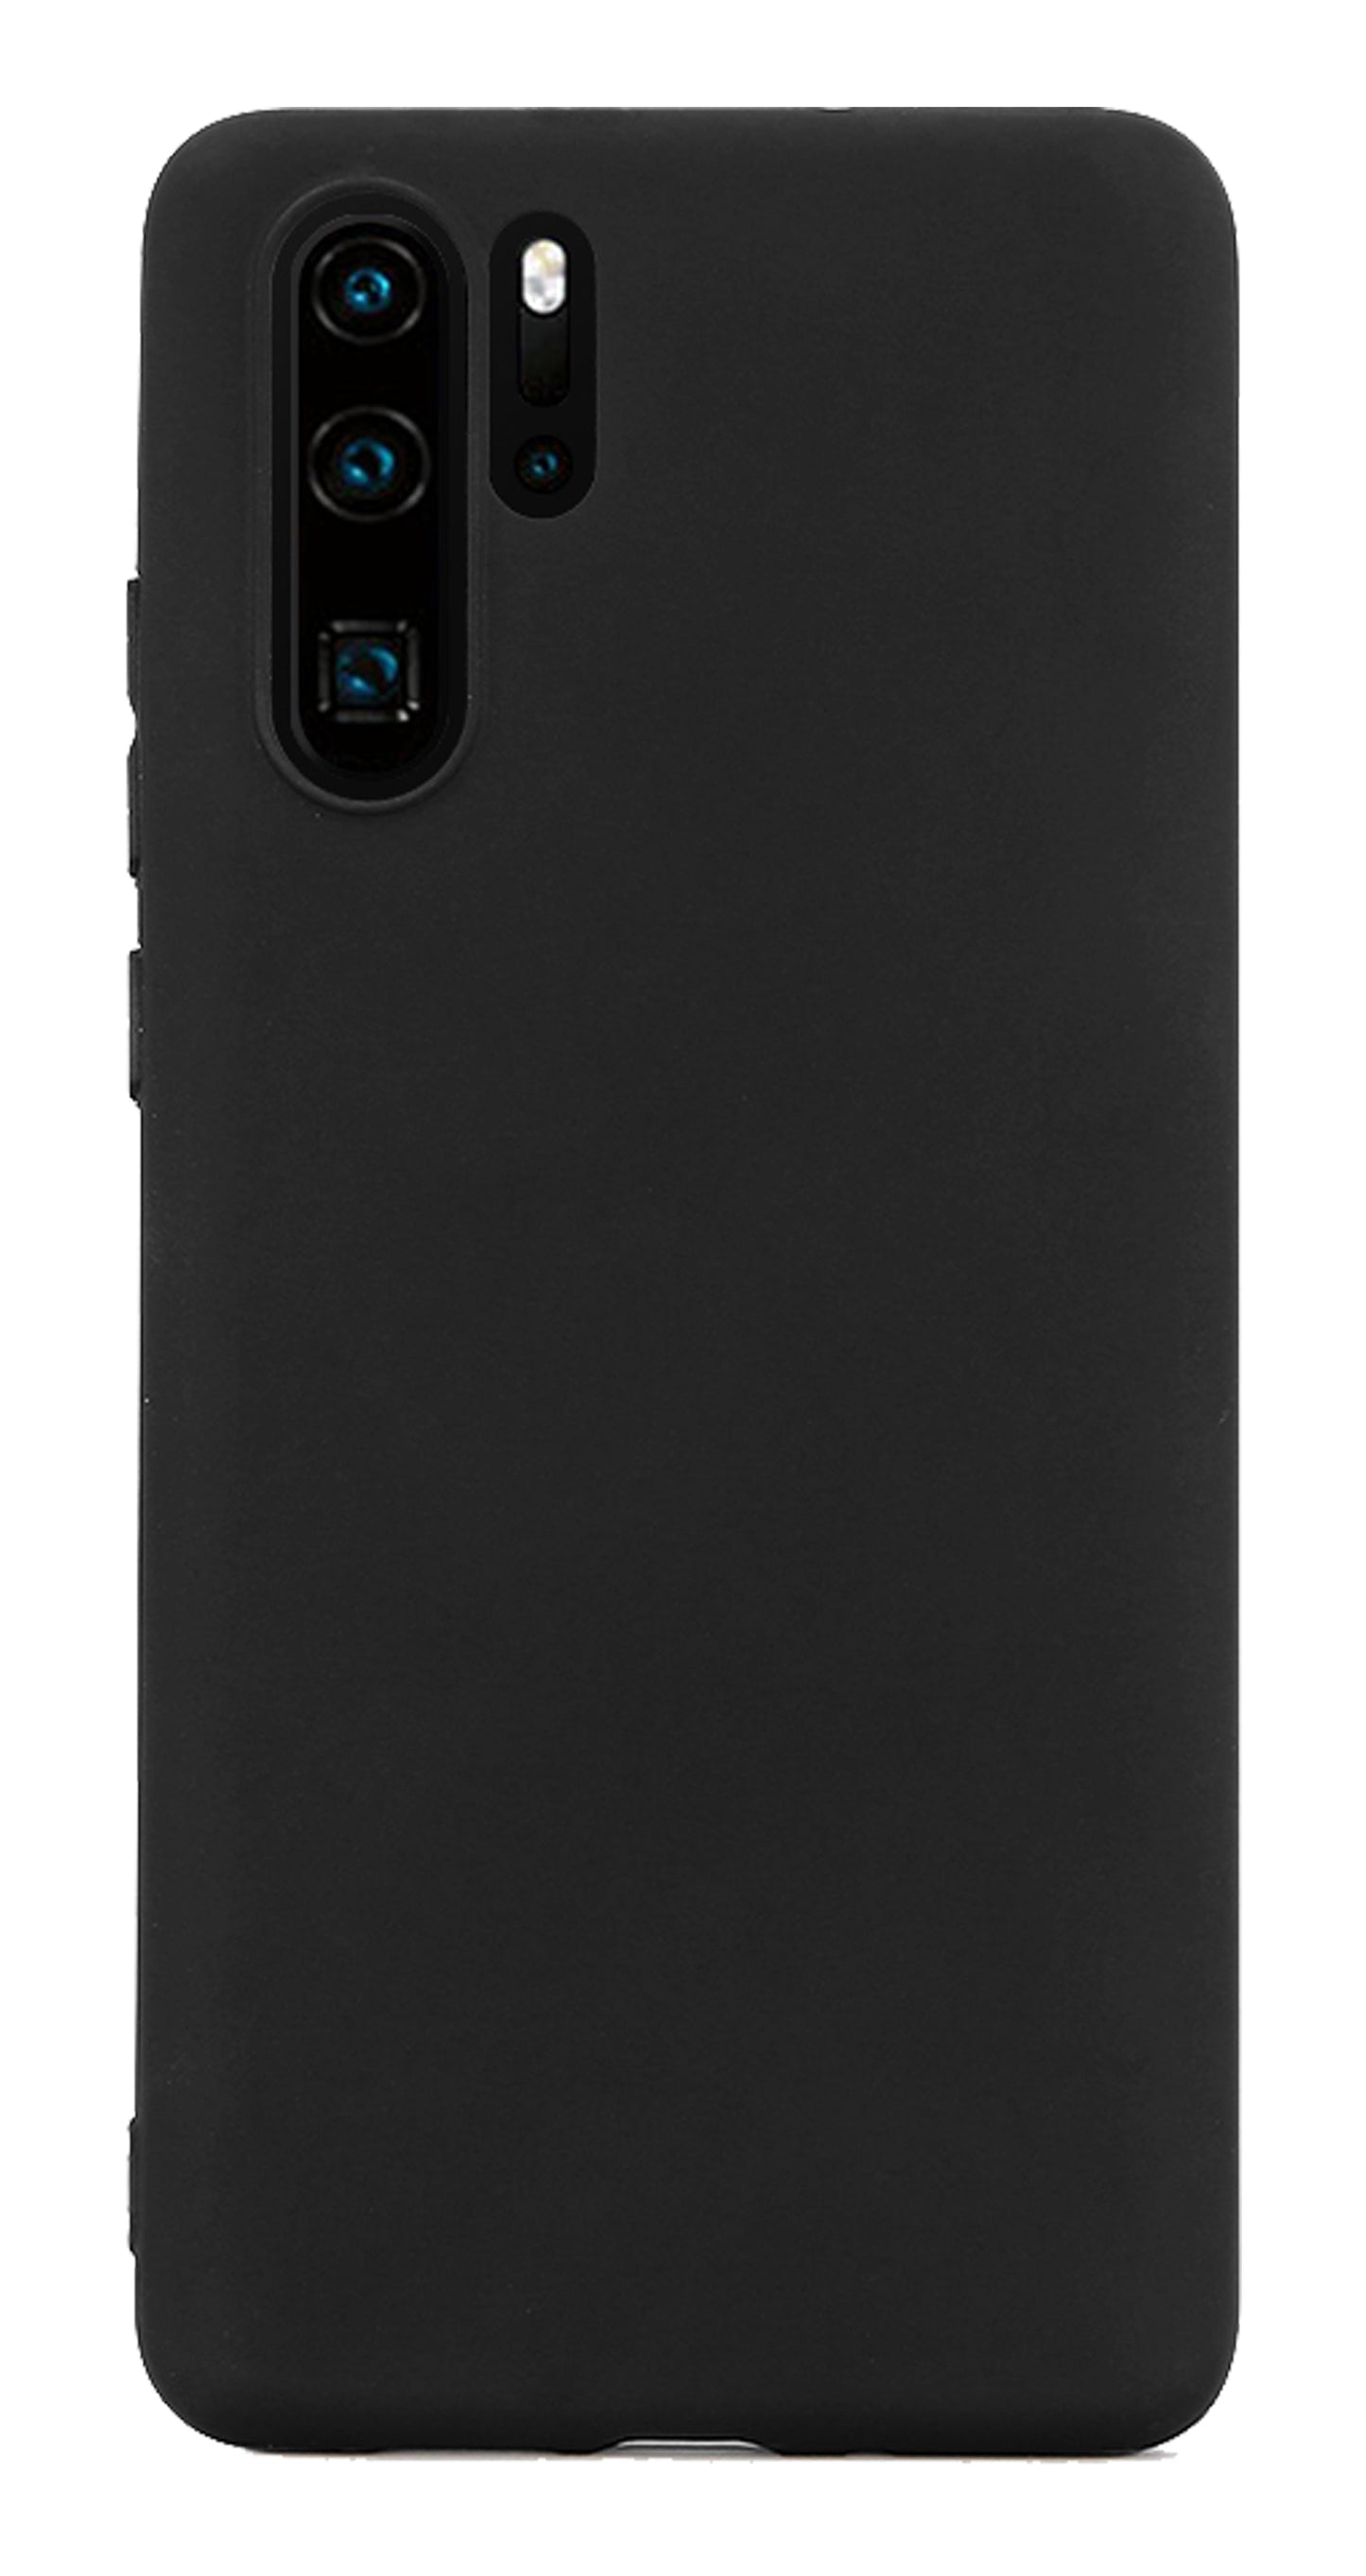 Gel Skin Case Black for Huawei P30 Pro